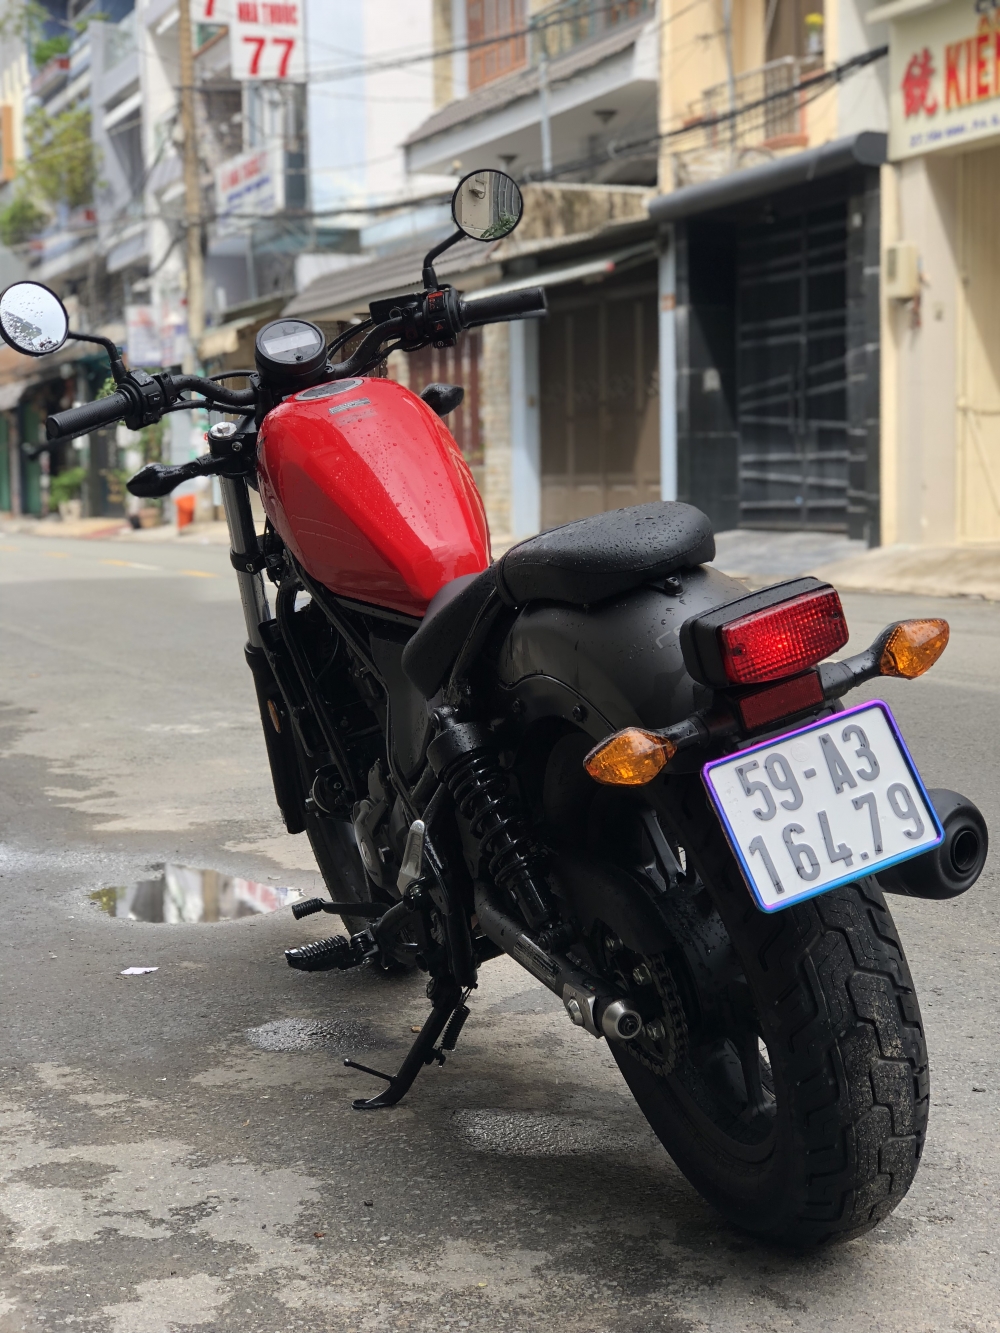 __Can ban Honda Rebel 300 ABS date 2018 mau do odo 400km moi bam bien so dep xong ban luon - 8